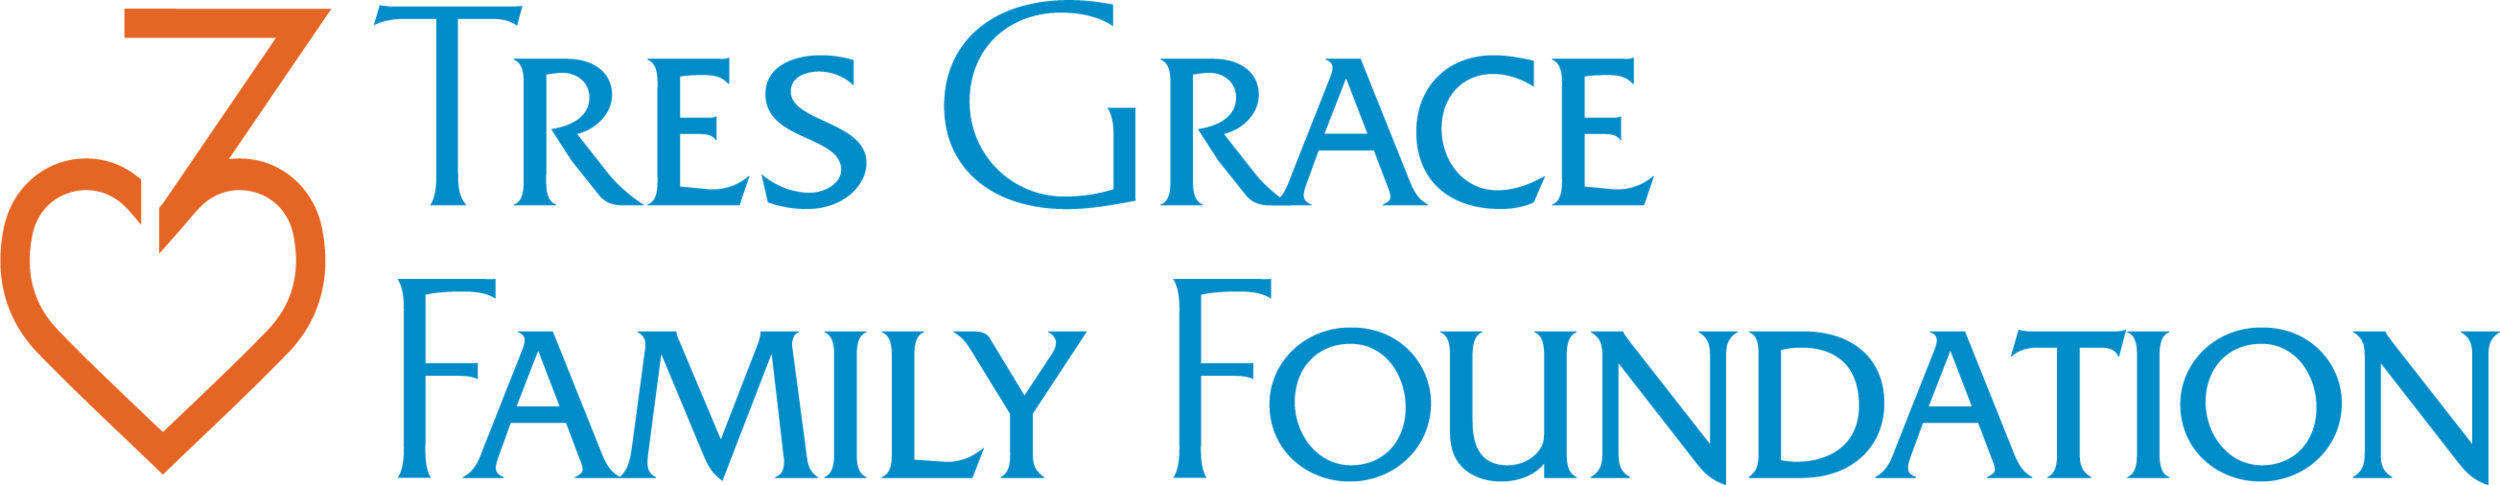 Tres Grace Foundation